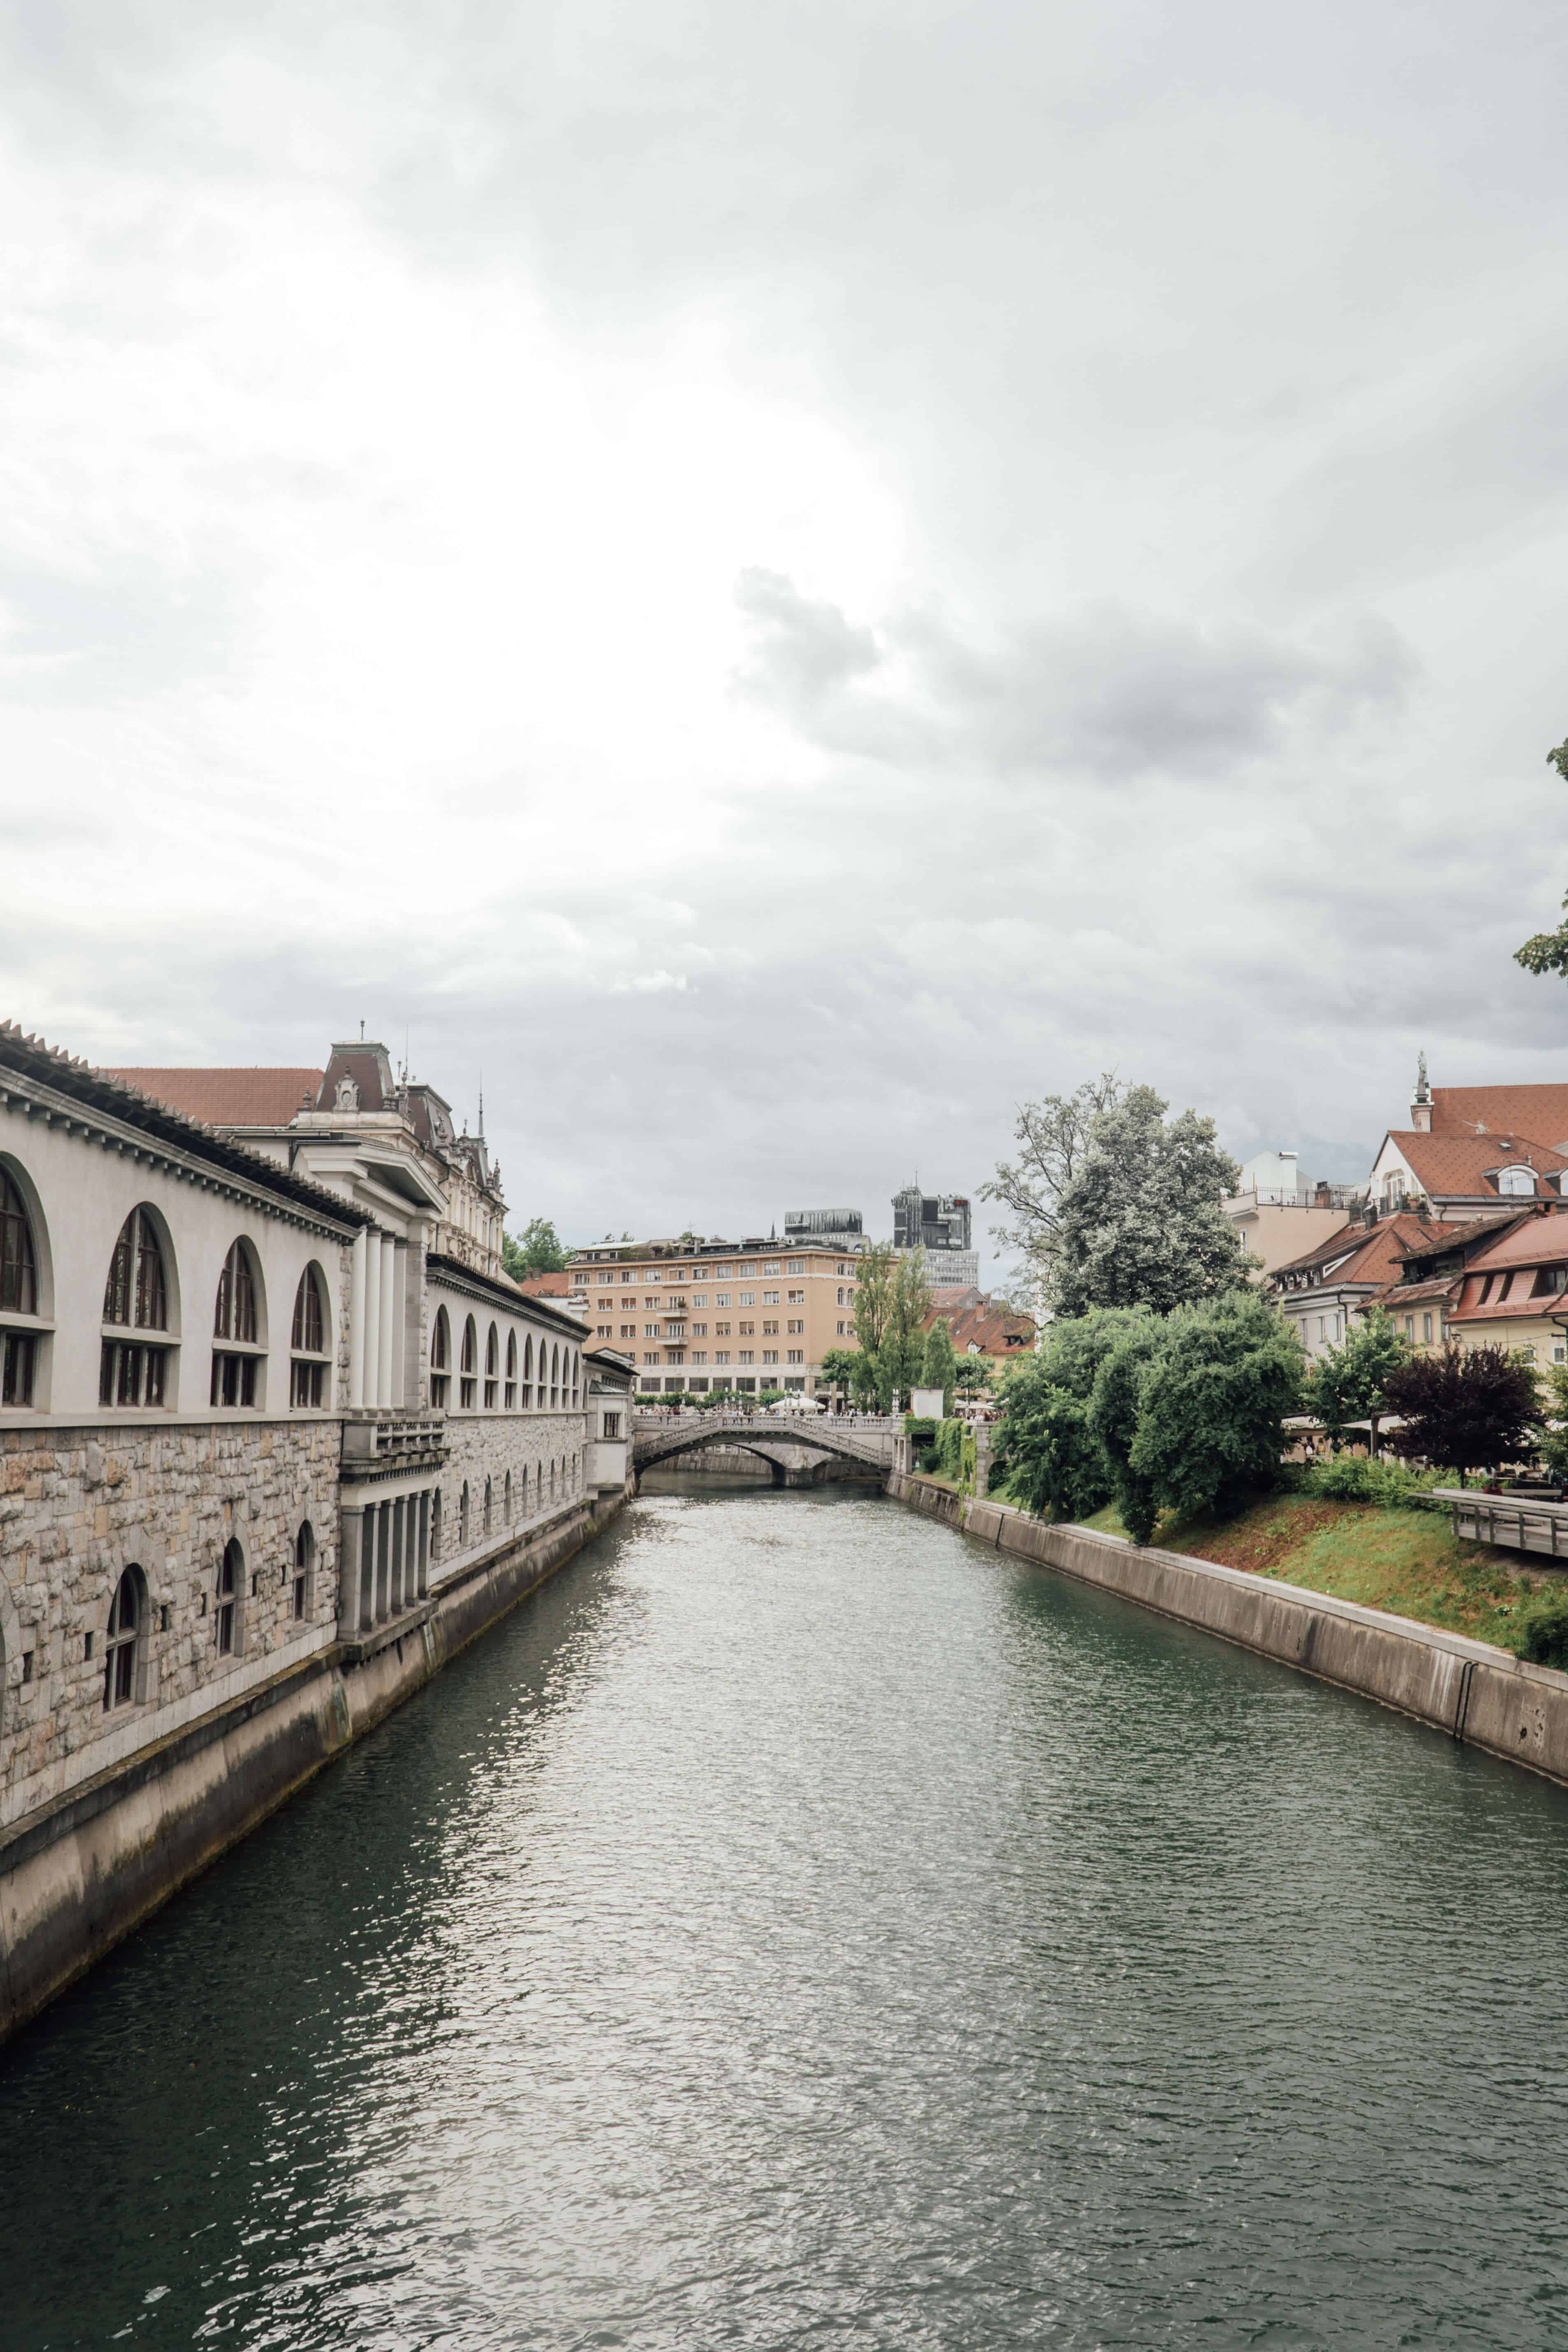 How to Spend One Day in Ljubljana Slovenia | River view | The Republic of Rose | #Ljubljana #Slovenia #Travel #Europe